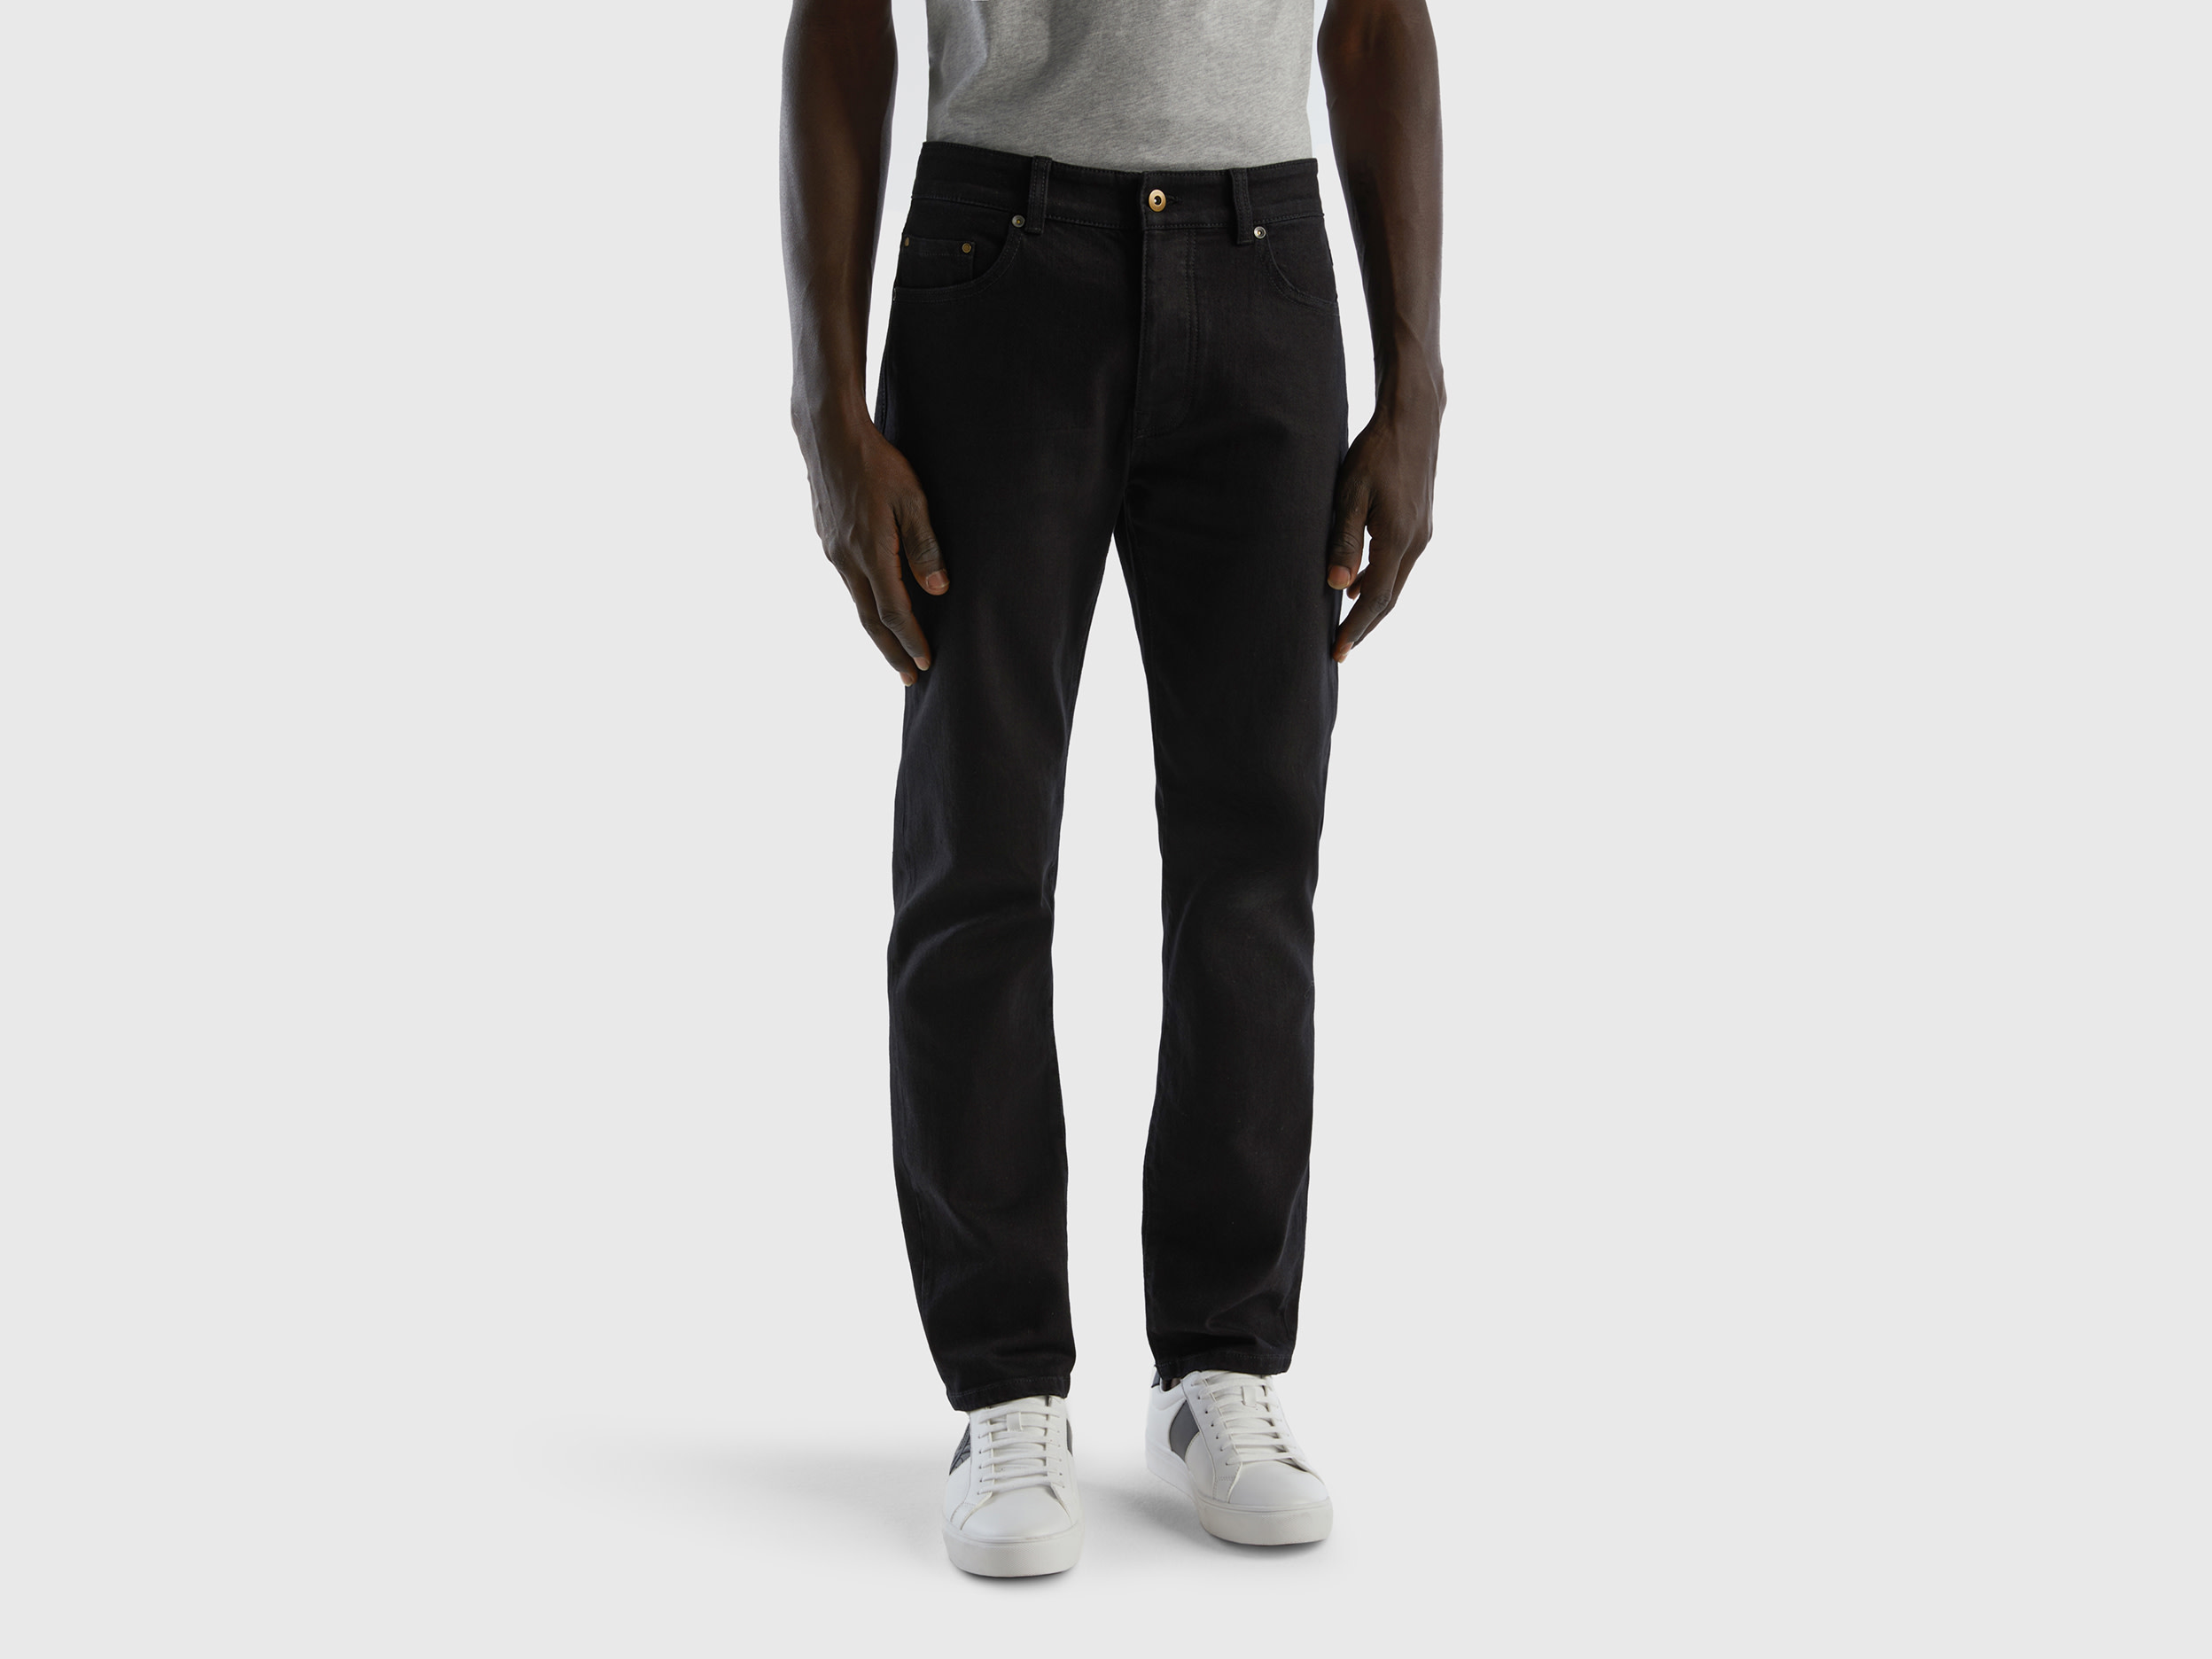 Benetton, Five Pocket Slim Fit Jeans, size 38, Black, Men